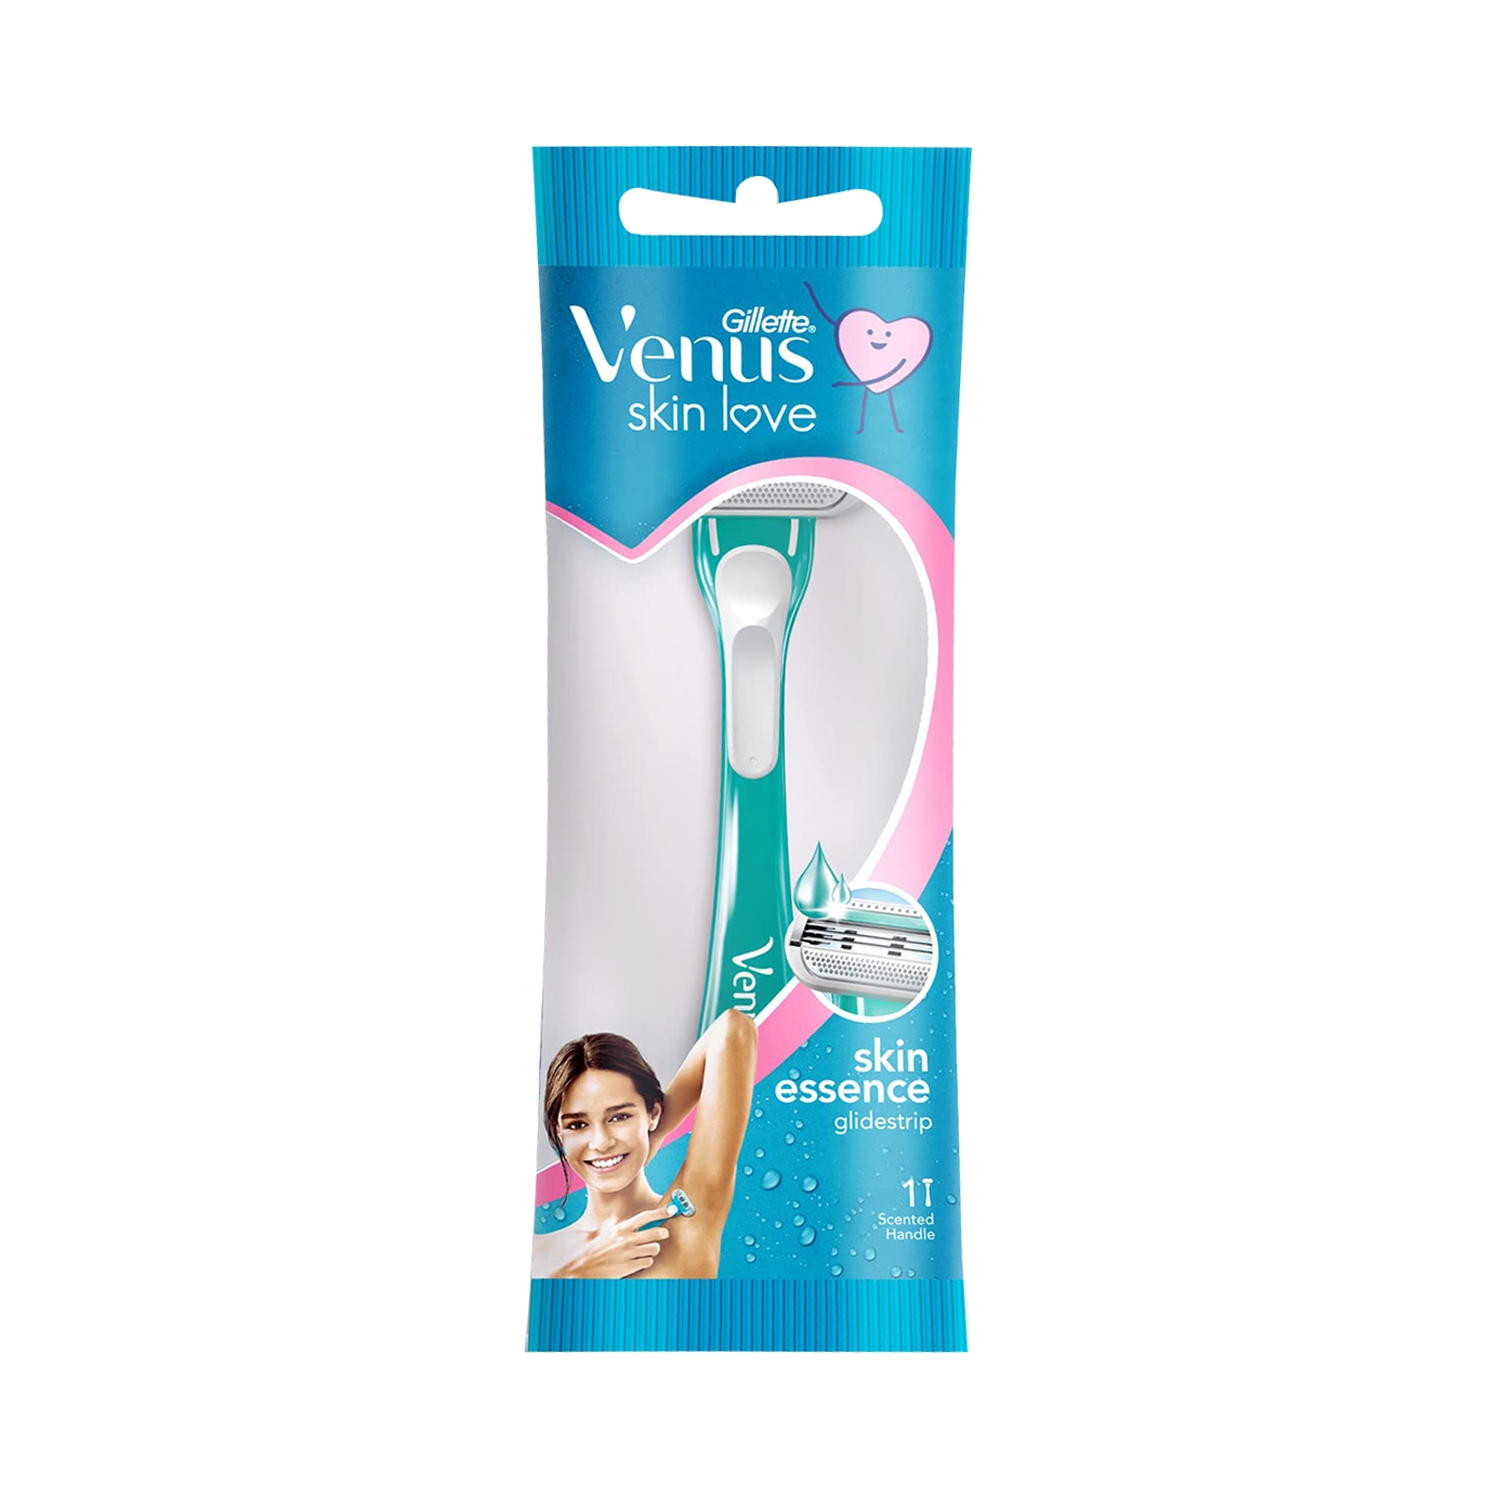 Gillette | Gillette Venus Skin Love with Skin Essence Razor for Hair Removal